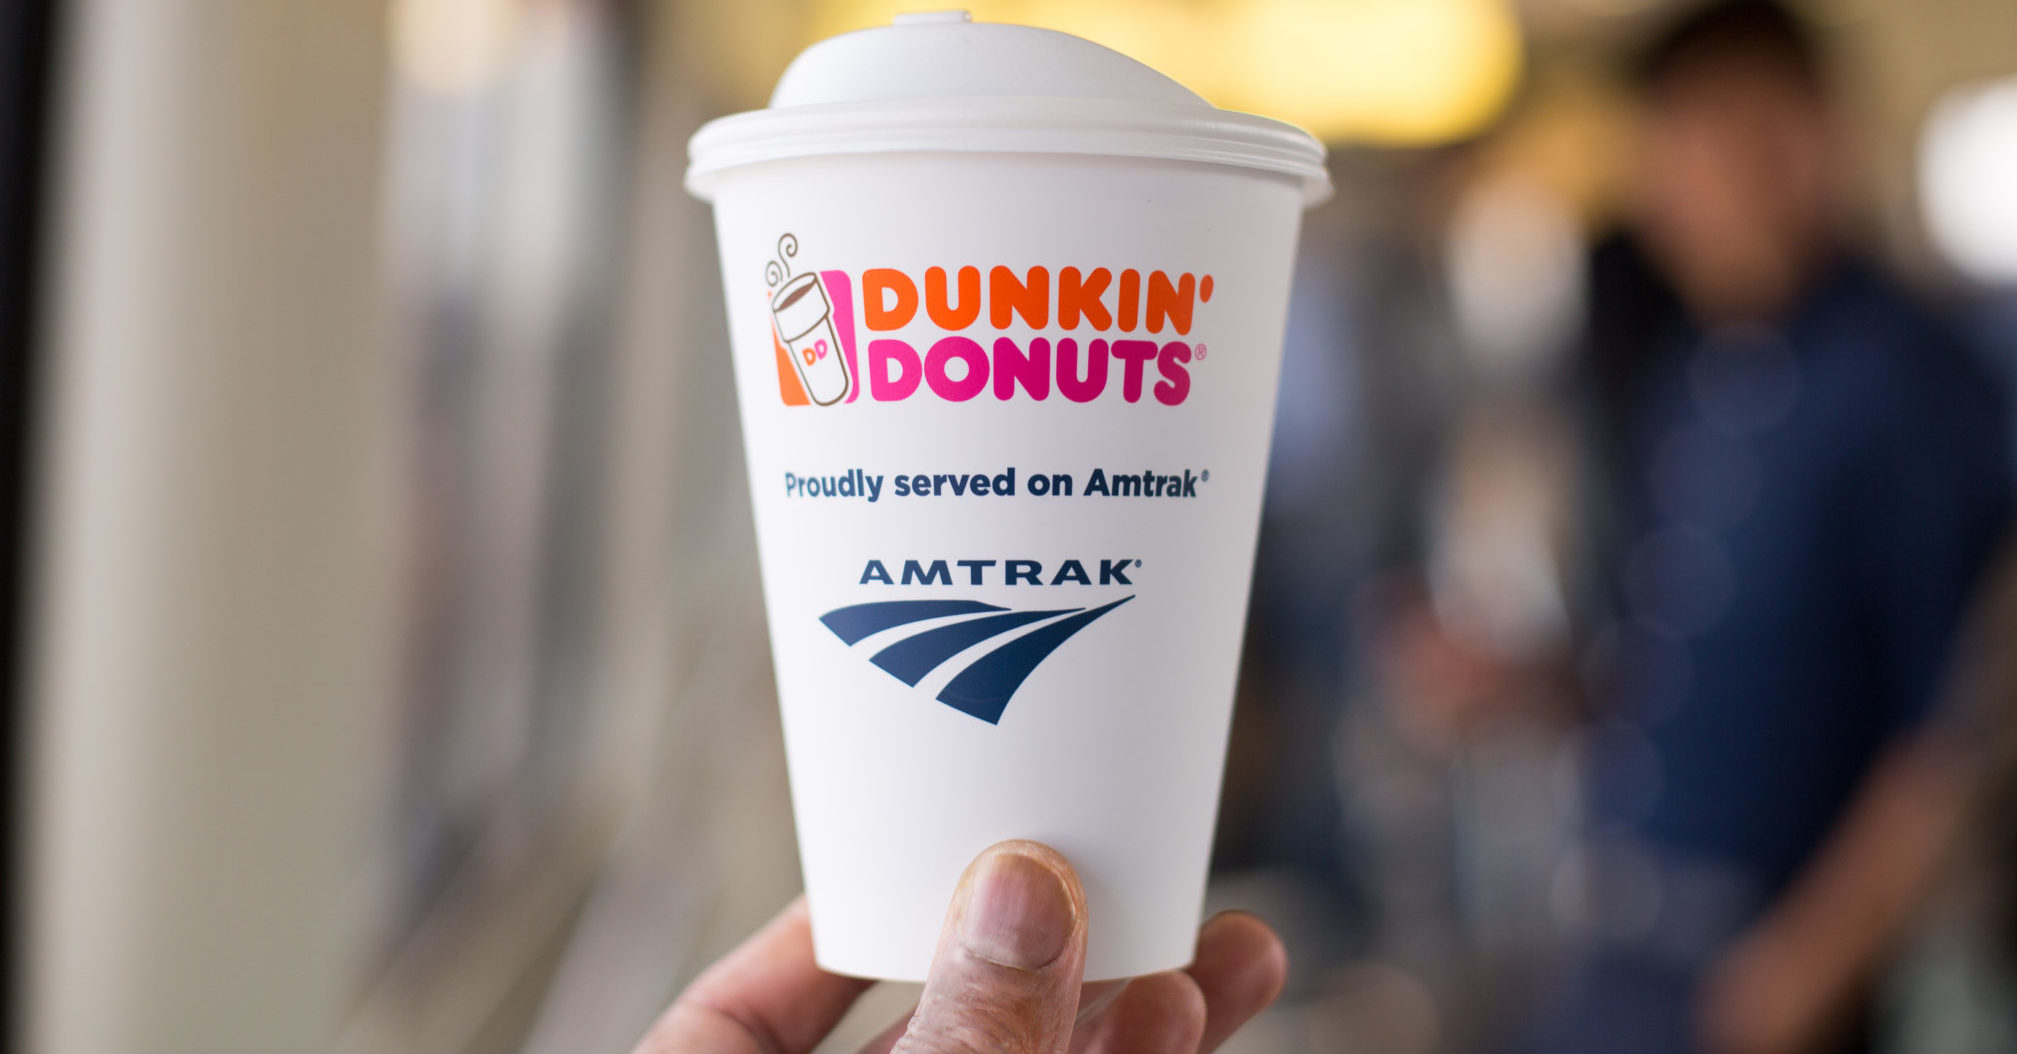 #AmtrakRunsOnDunkin National Coffee Day 2018